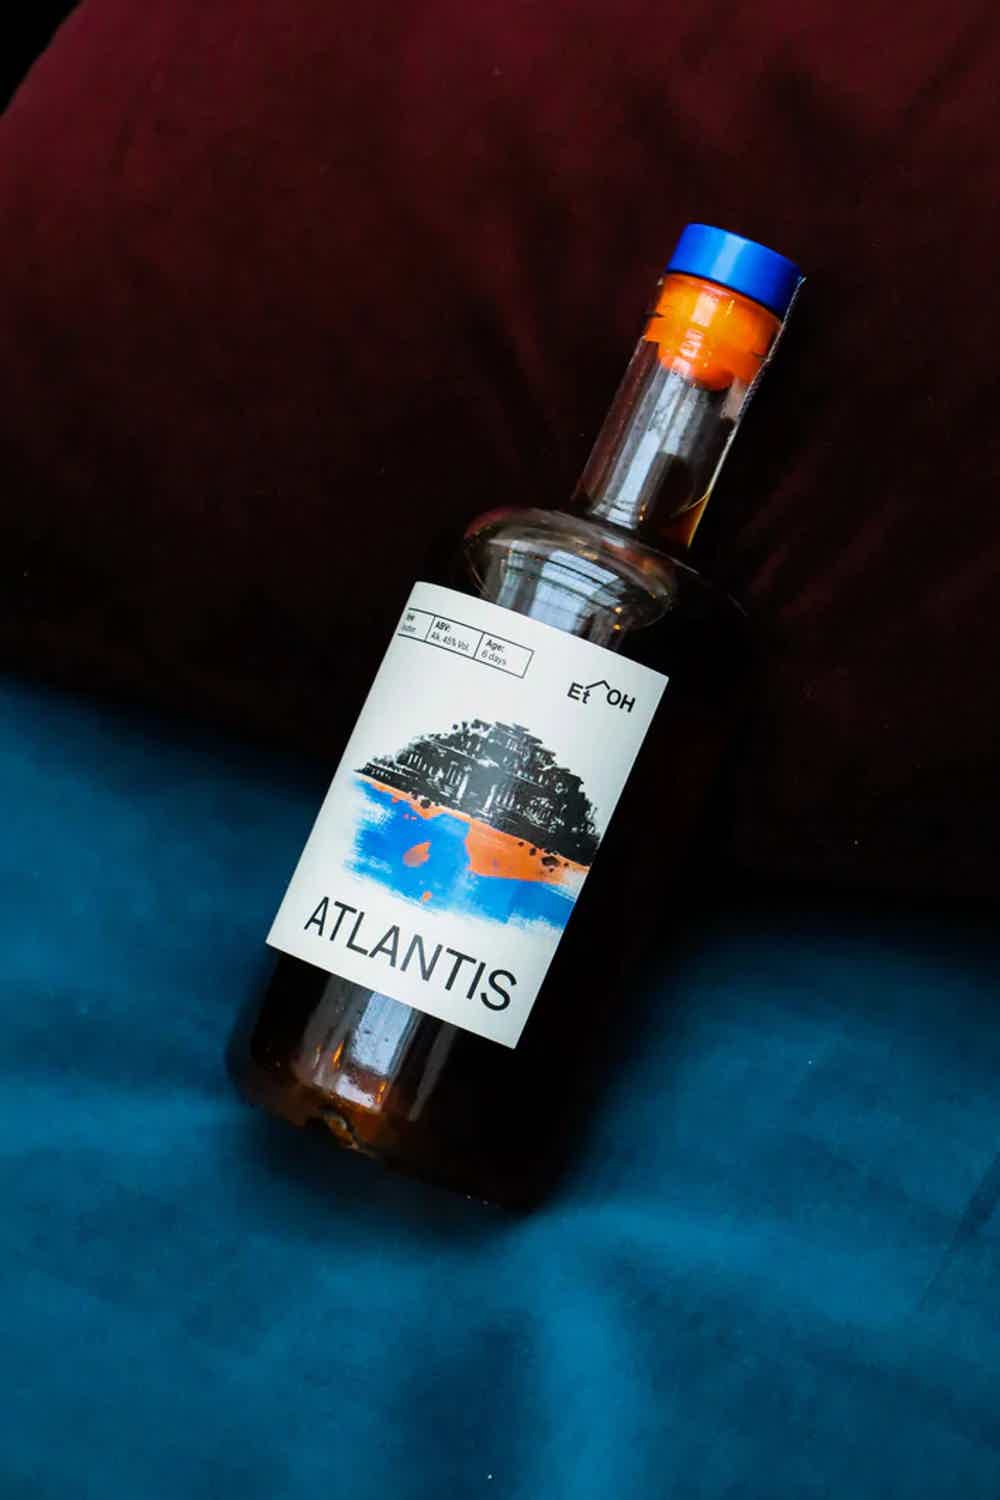 Atlantis & Appealing: Atlantis, Appealing